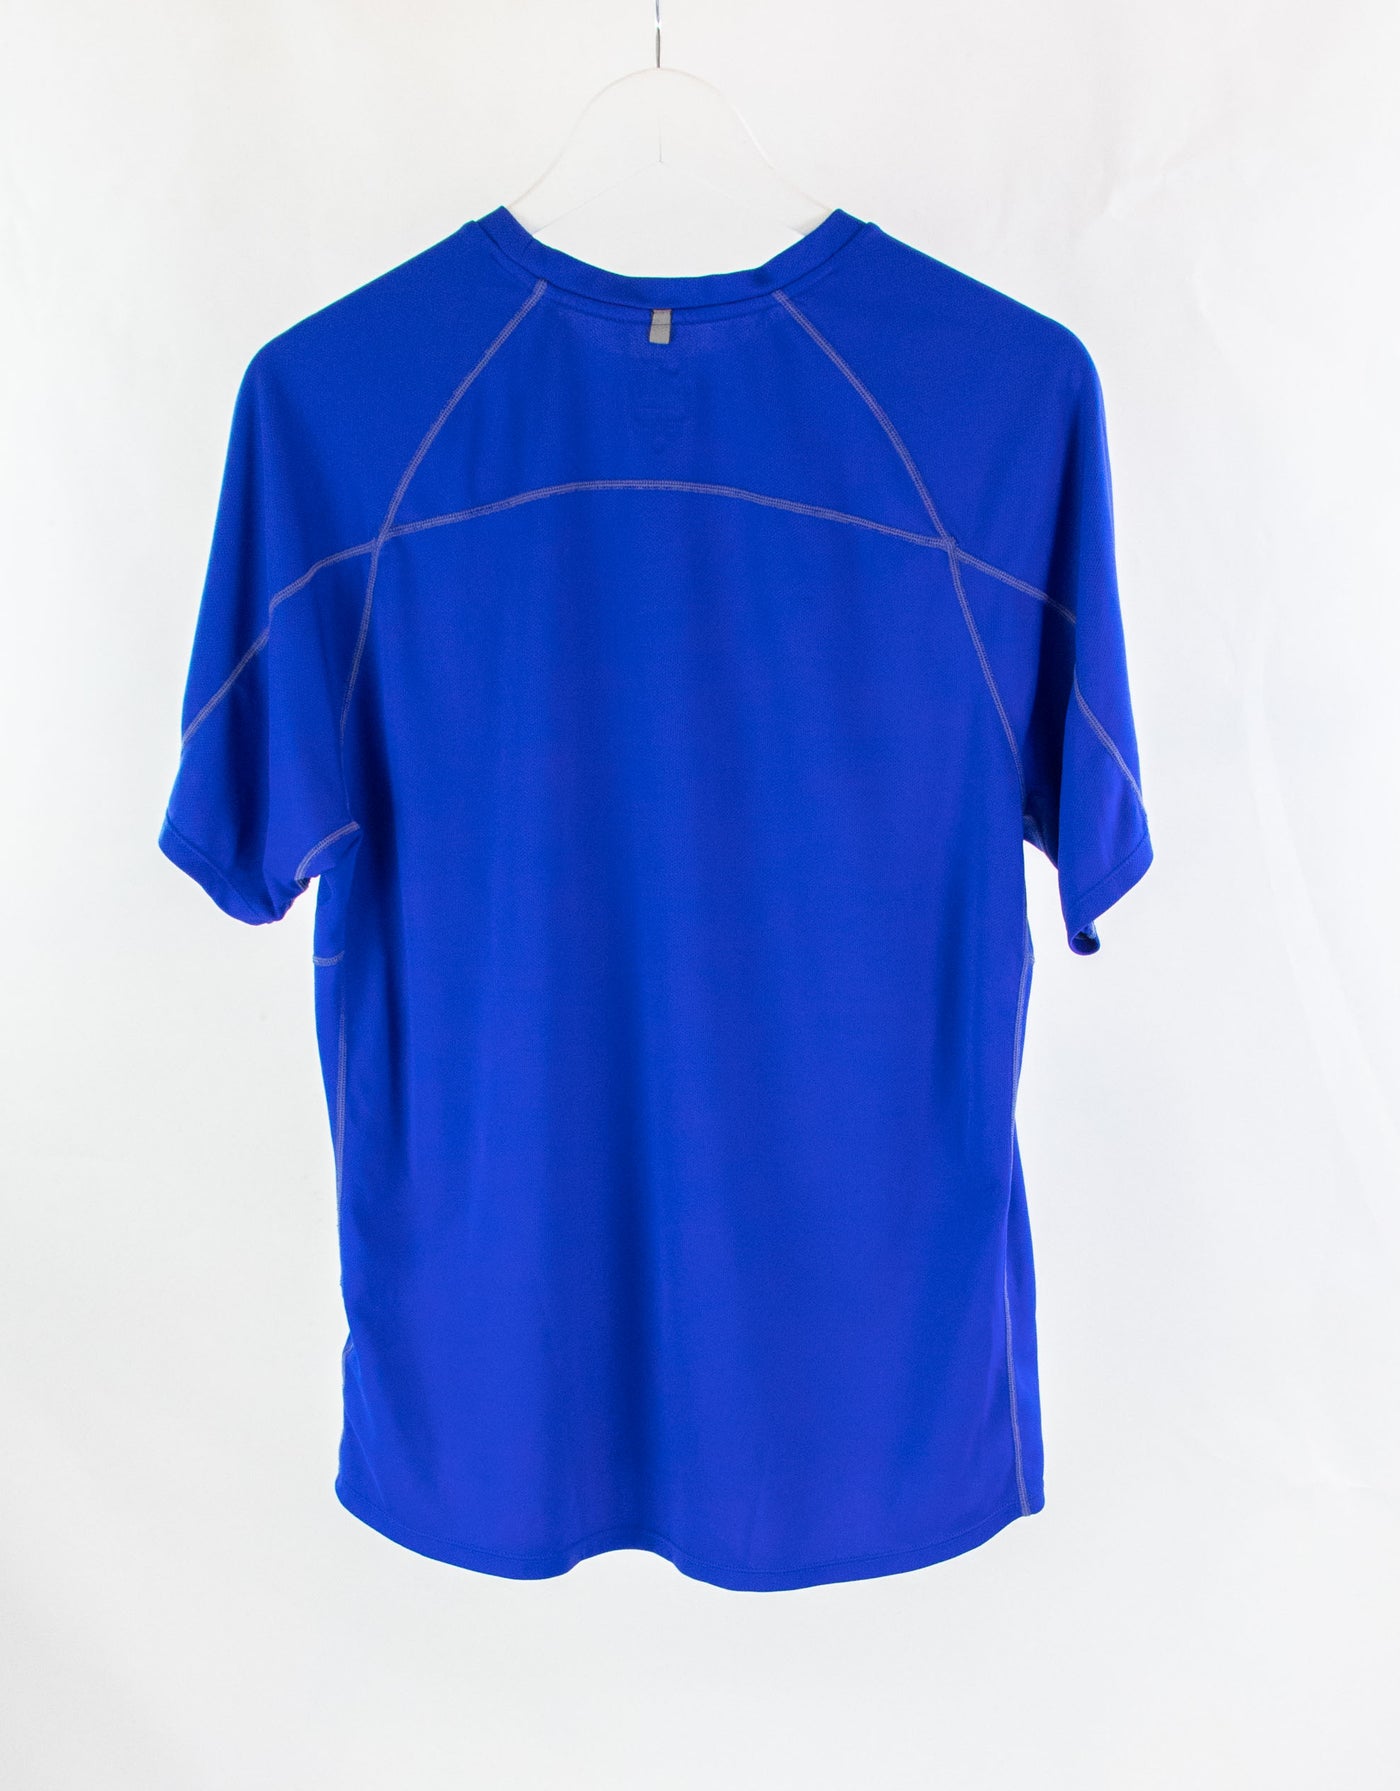 Camiseta azul deportiva NIKE